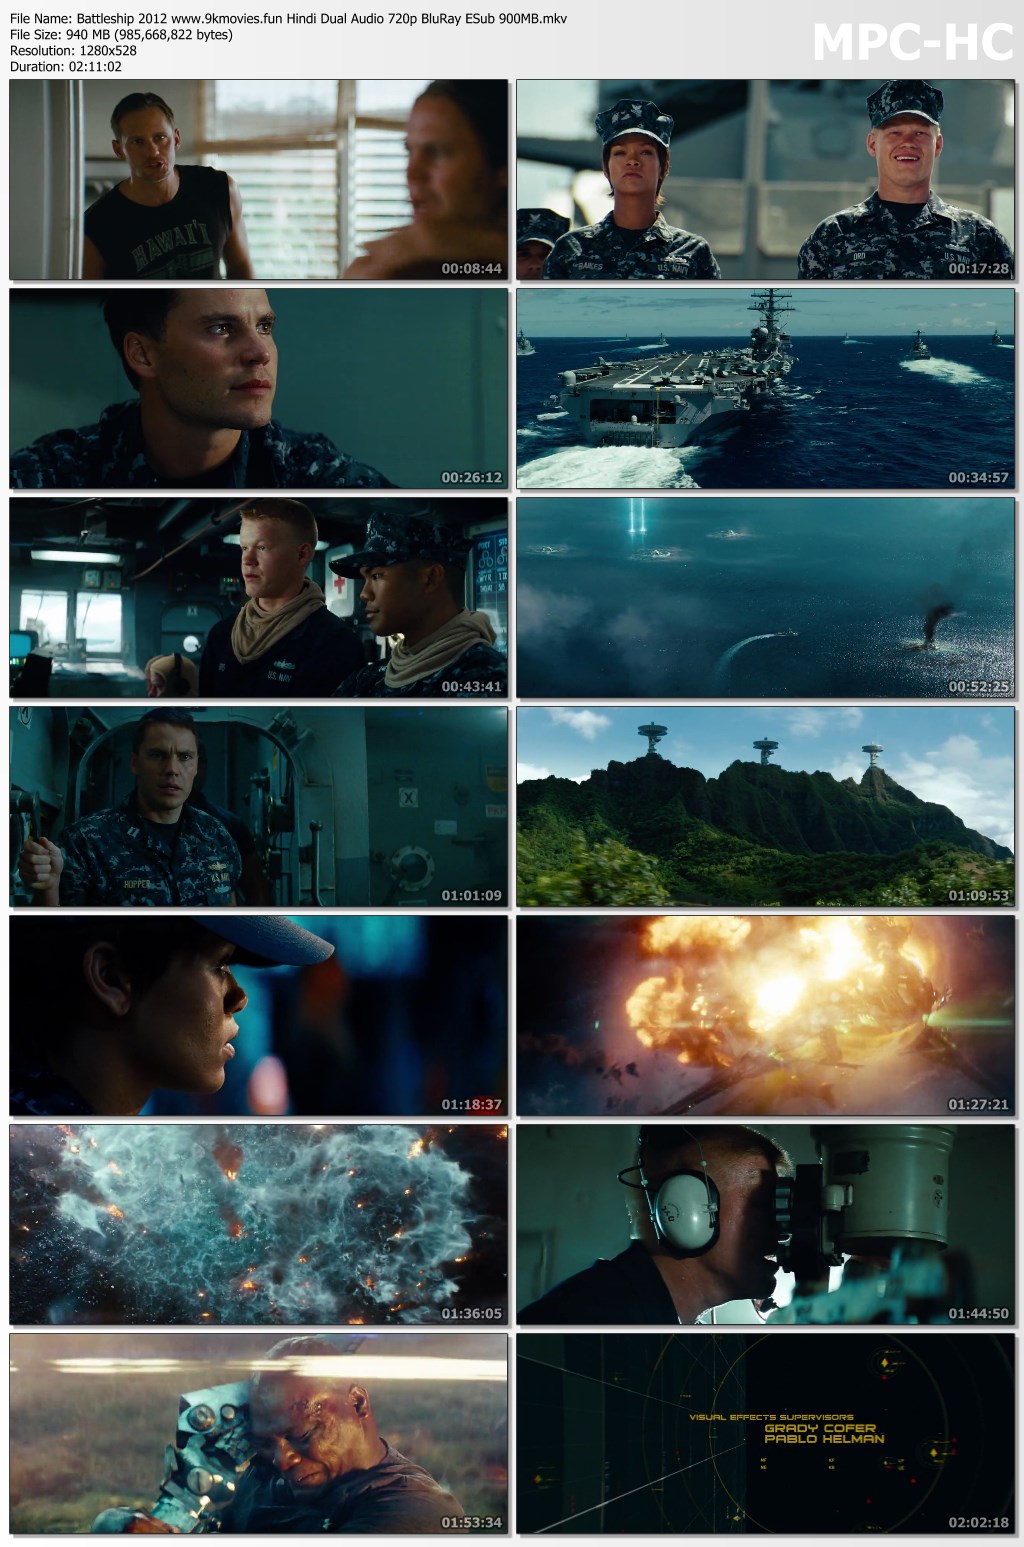 battleship 2012 tamil dubbed movie download